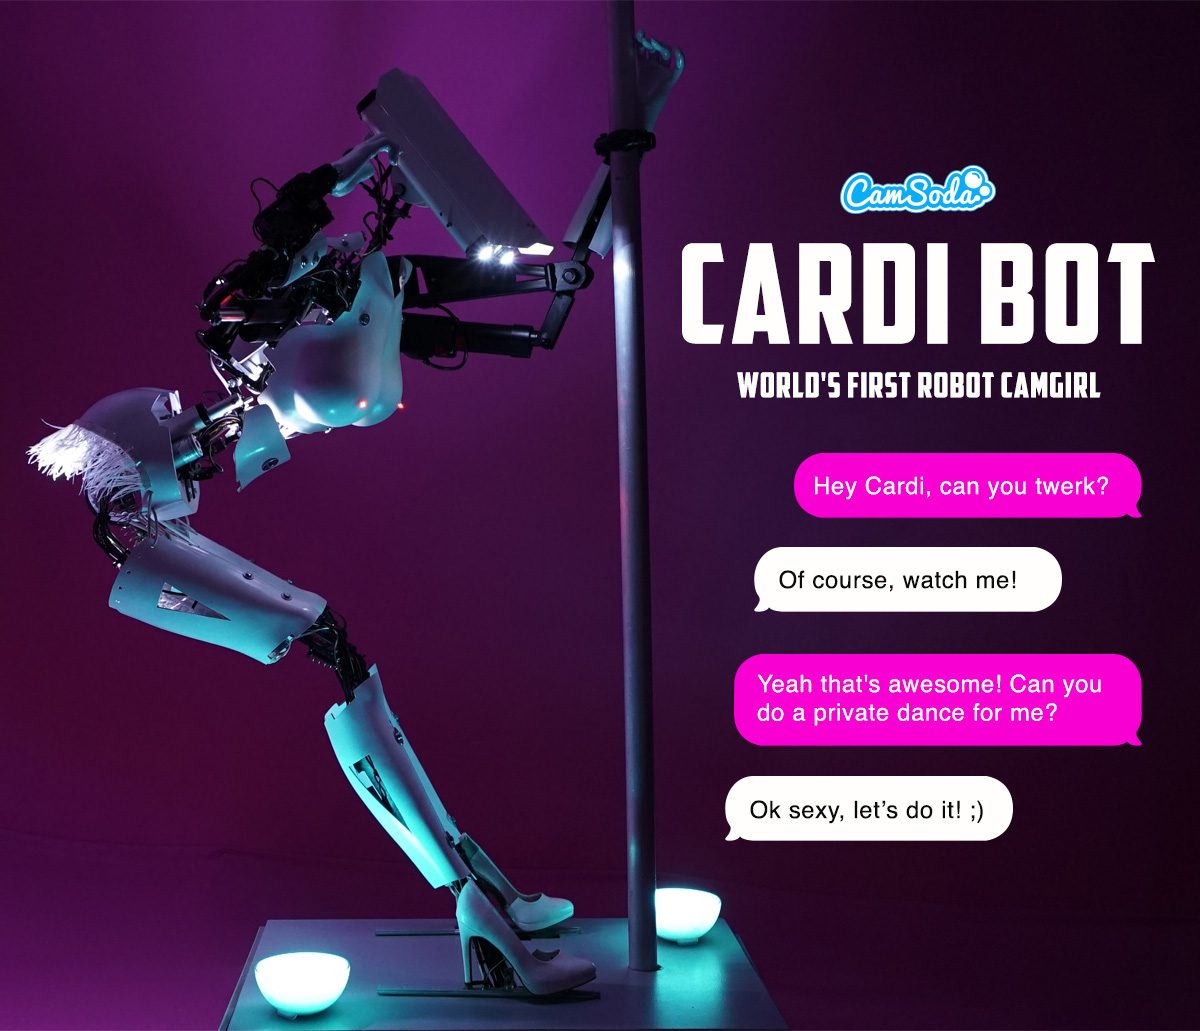 Alice Bonasio VR Consultancy MR Tom Atkinson Tech Trends Review AR Mixed Virtual Reality Augmented Camsoda cardi-bot pole dancing robot sex cardi bot